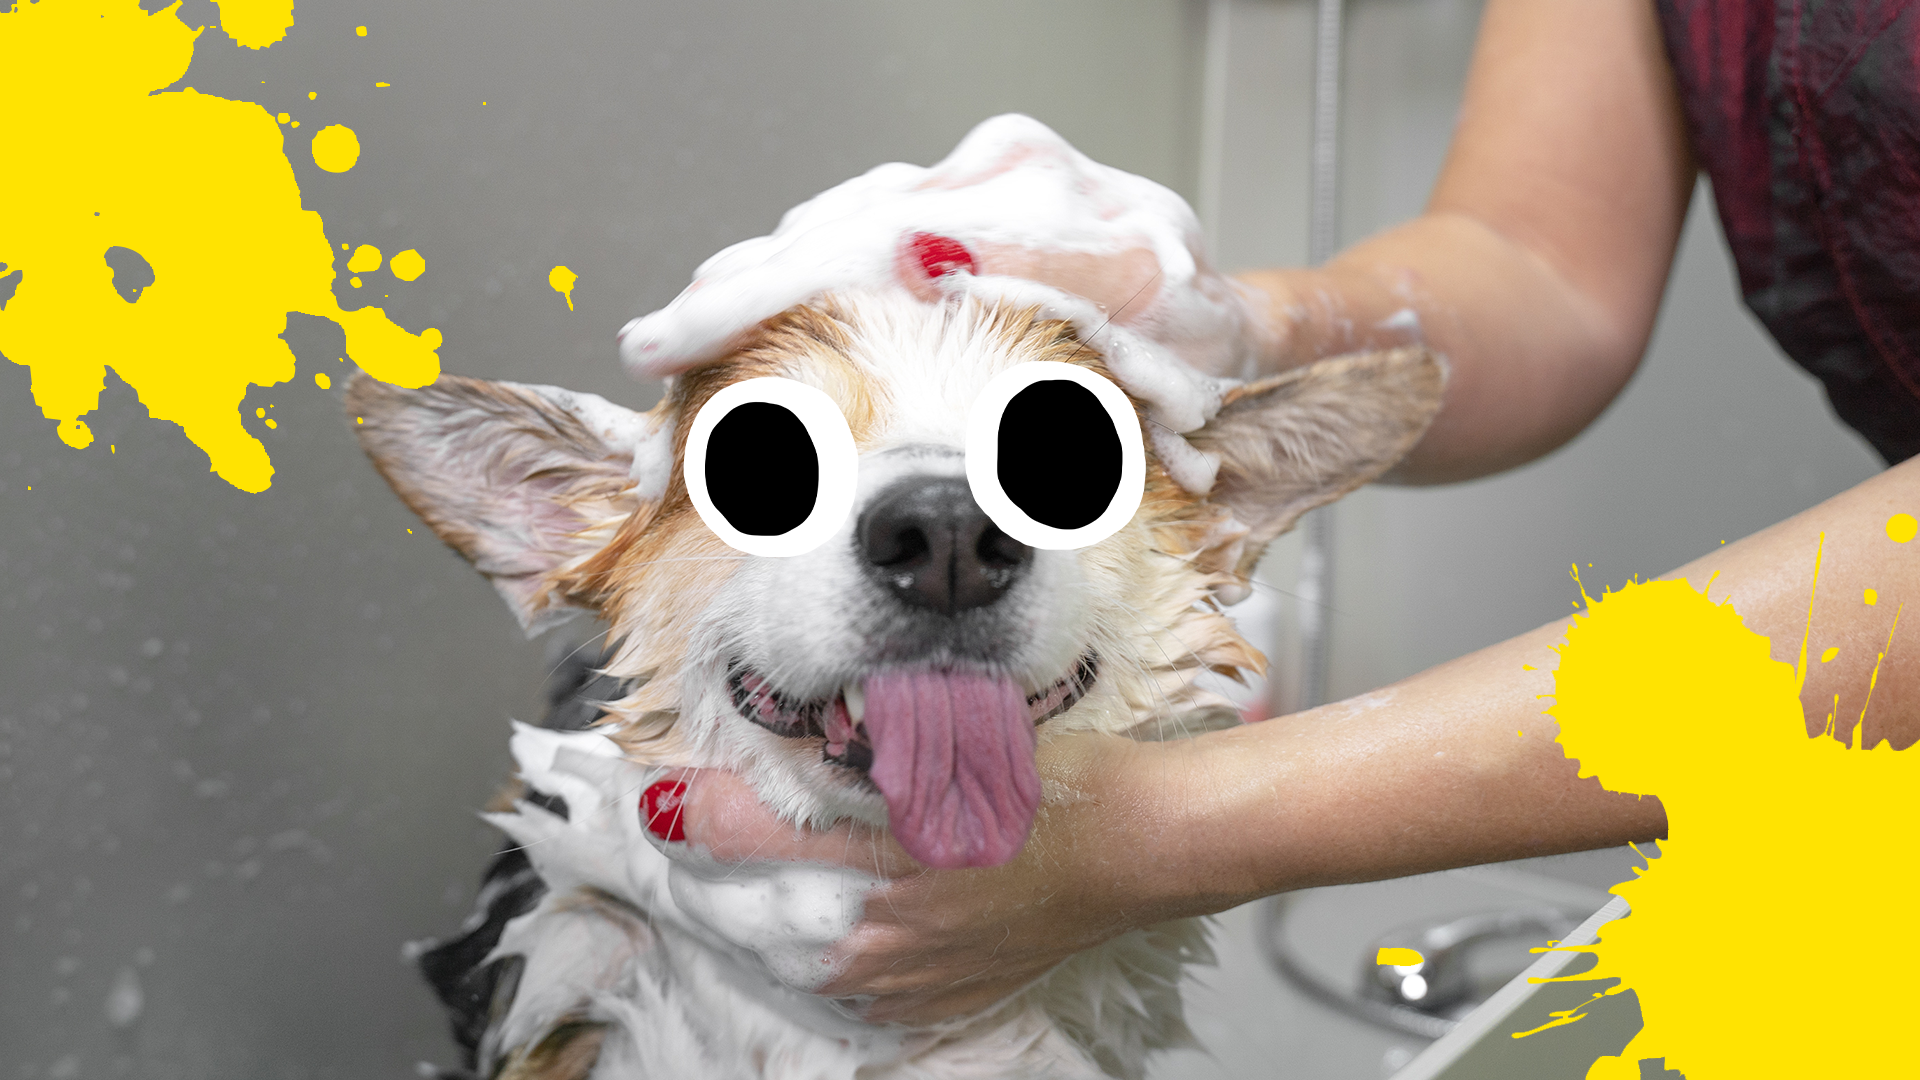 Dog enjoying a wash and yellow splats